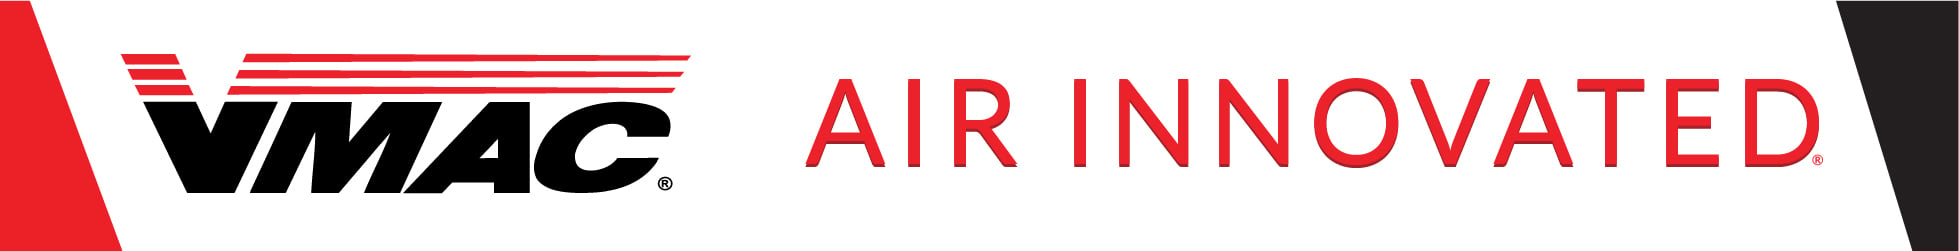 VMAC Air Innovated banner